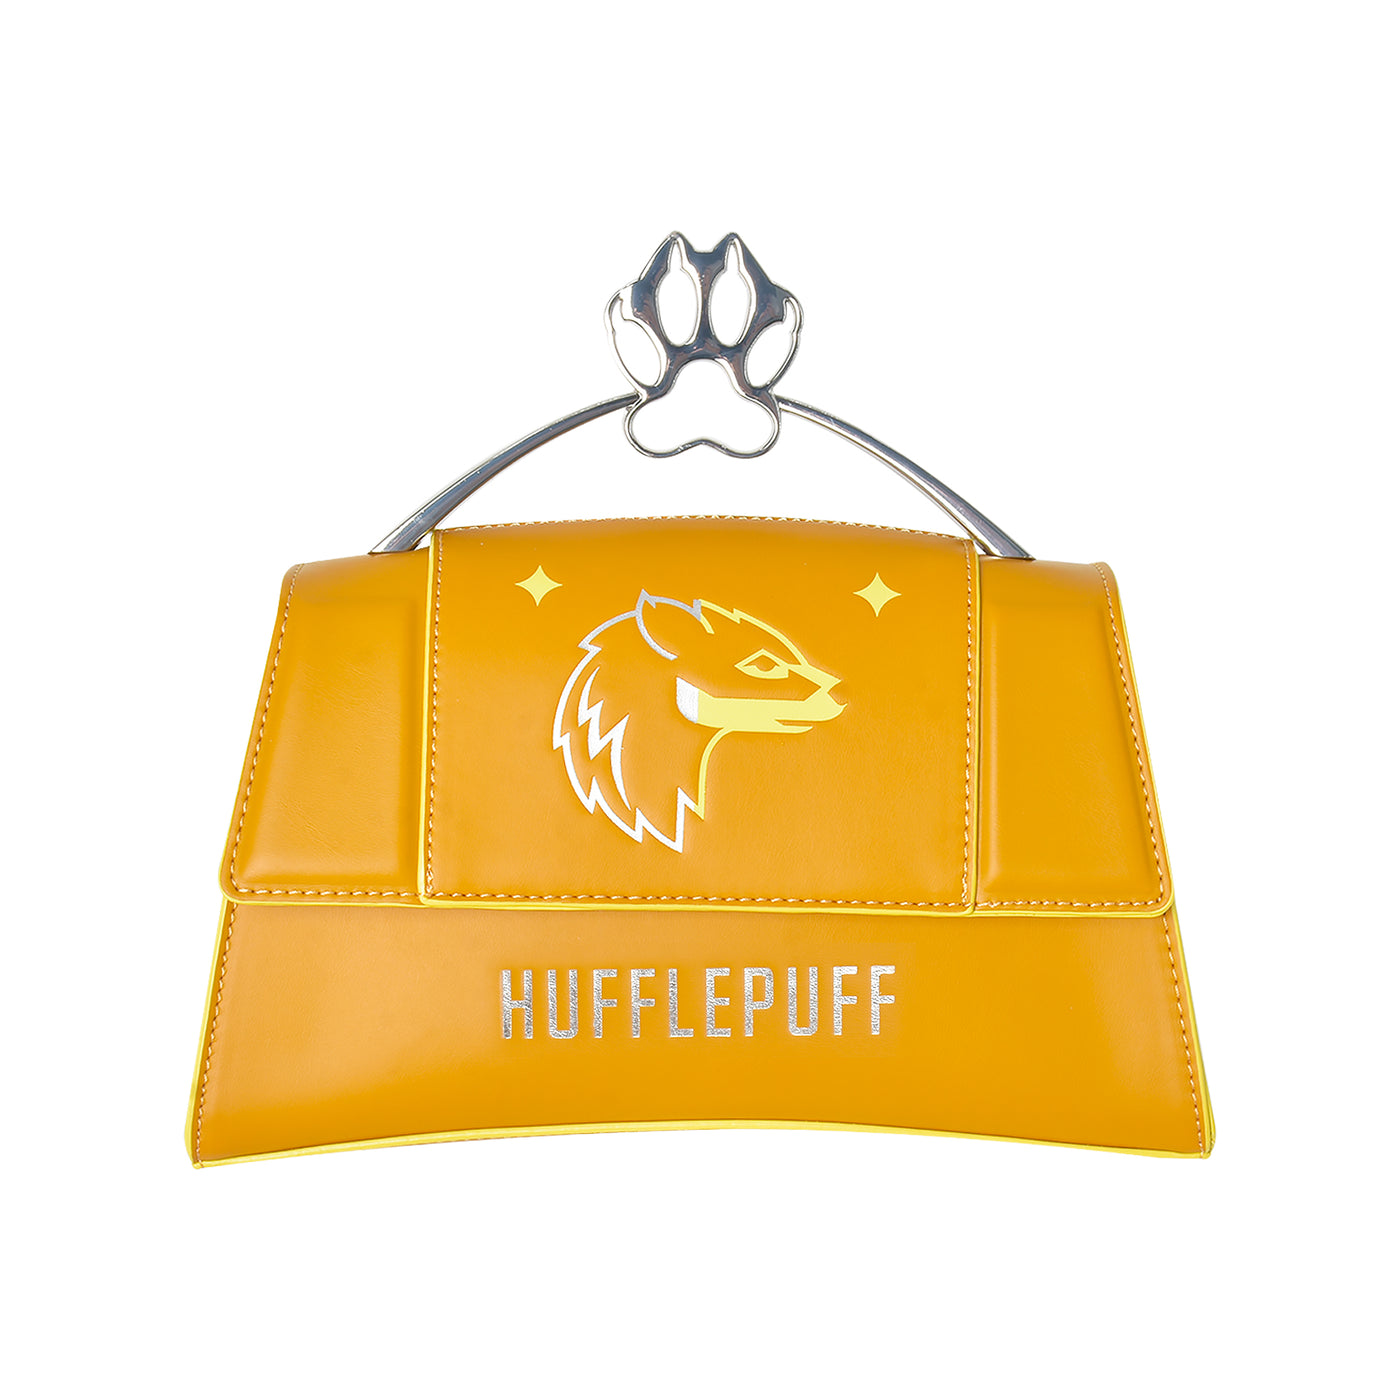 Fred Segal Harry Potter Hufflepuff Mascot Flap Satchel - Front